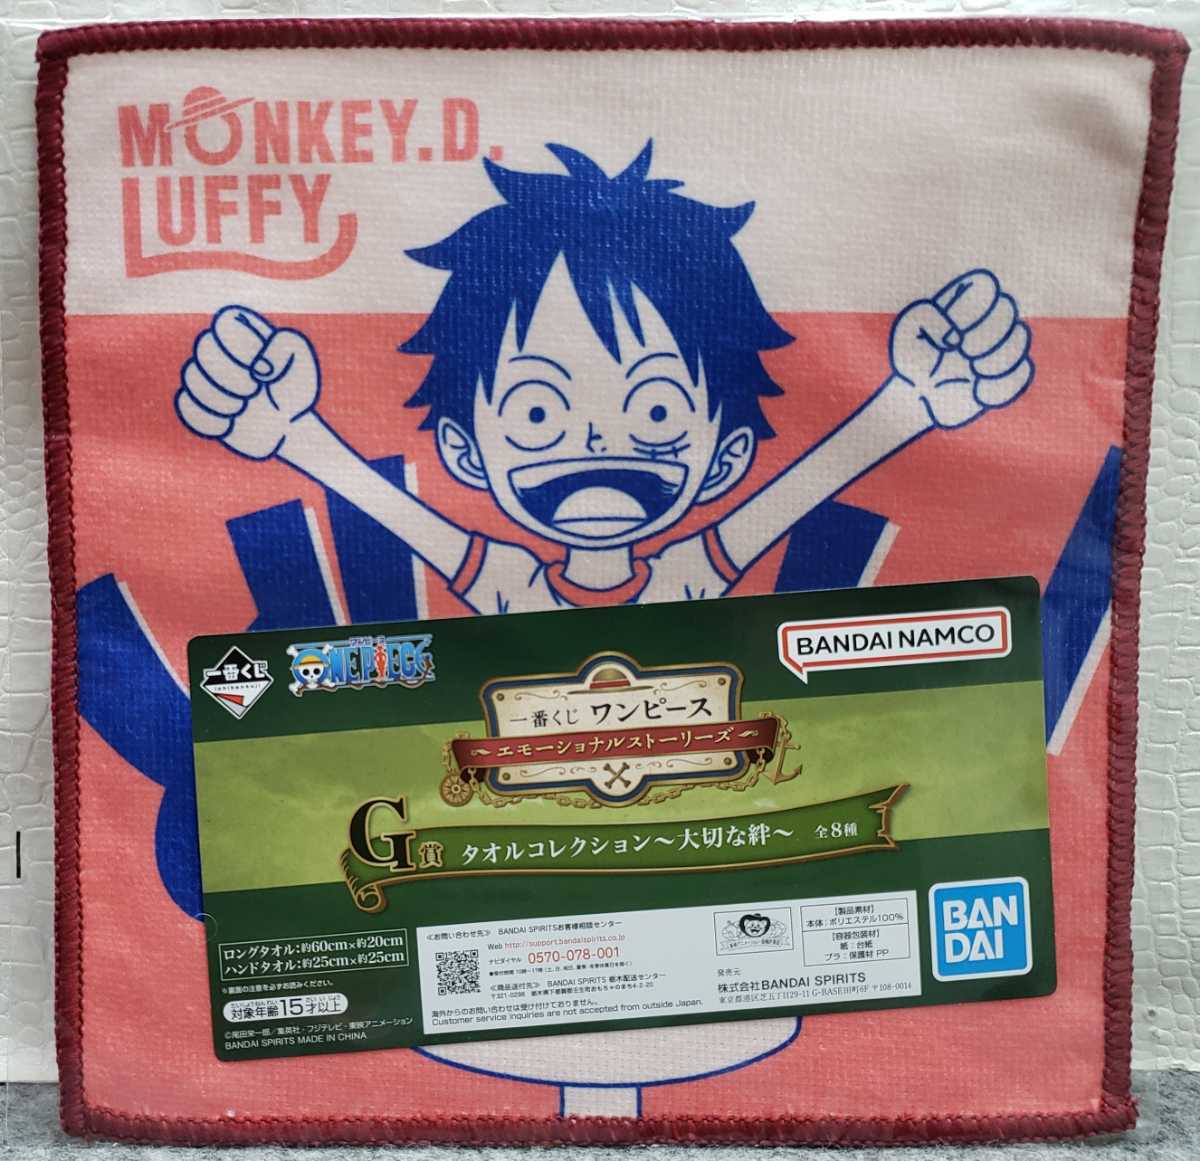 I11/ most lot One-piece emo -shonaru -stroke - Lee zG. towel collection ~ important .~ Monkey *D*rufi. little period ①-⑨